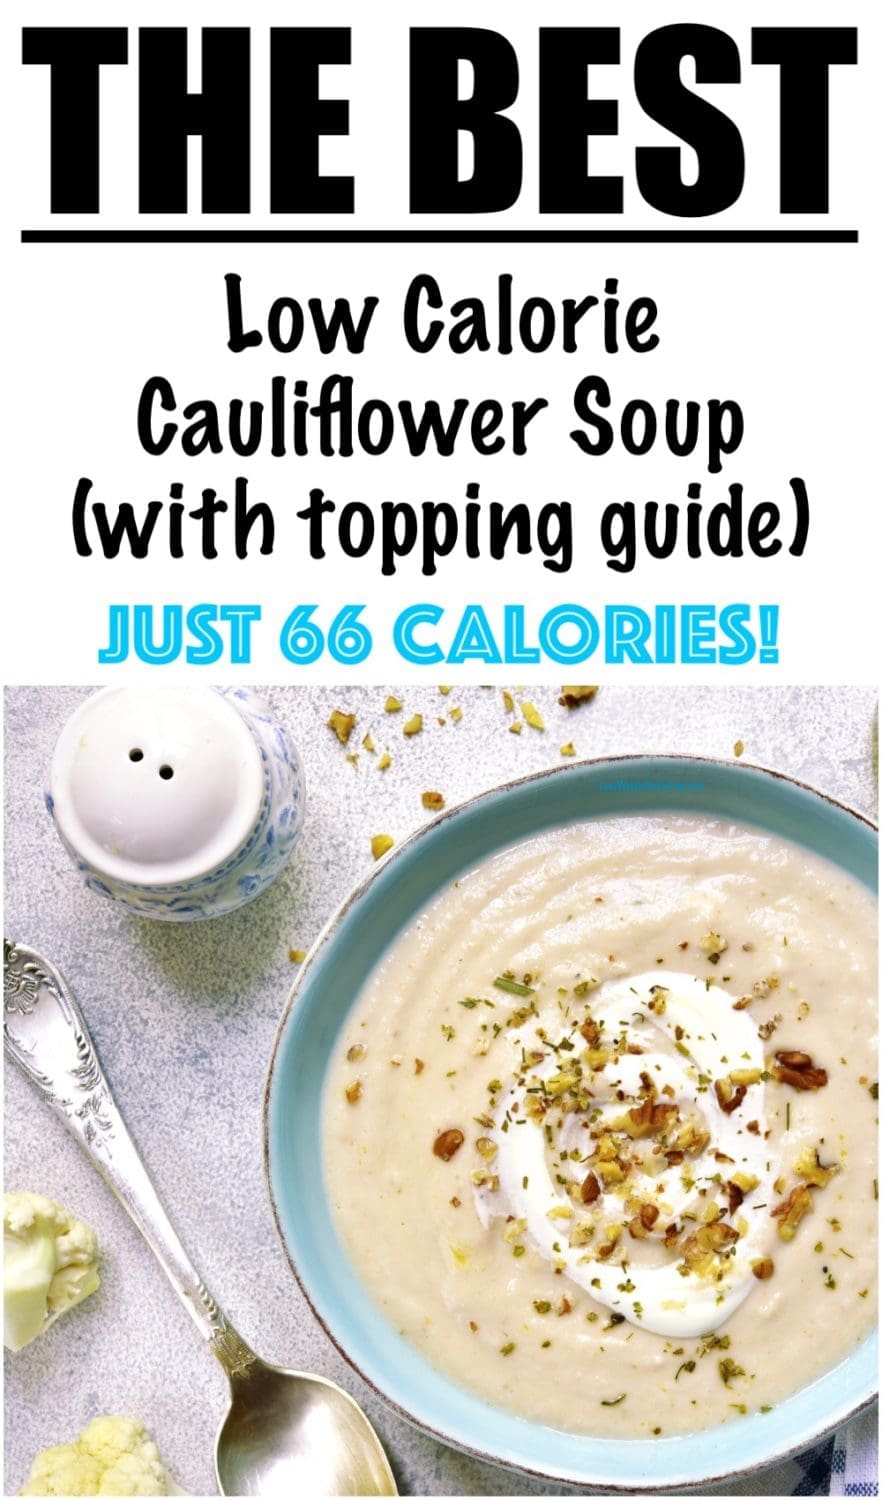 Healthy Cauliflower Soup Recipe